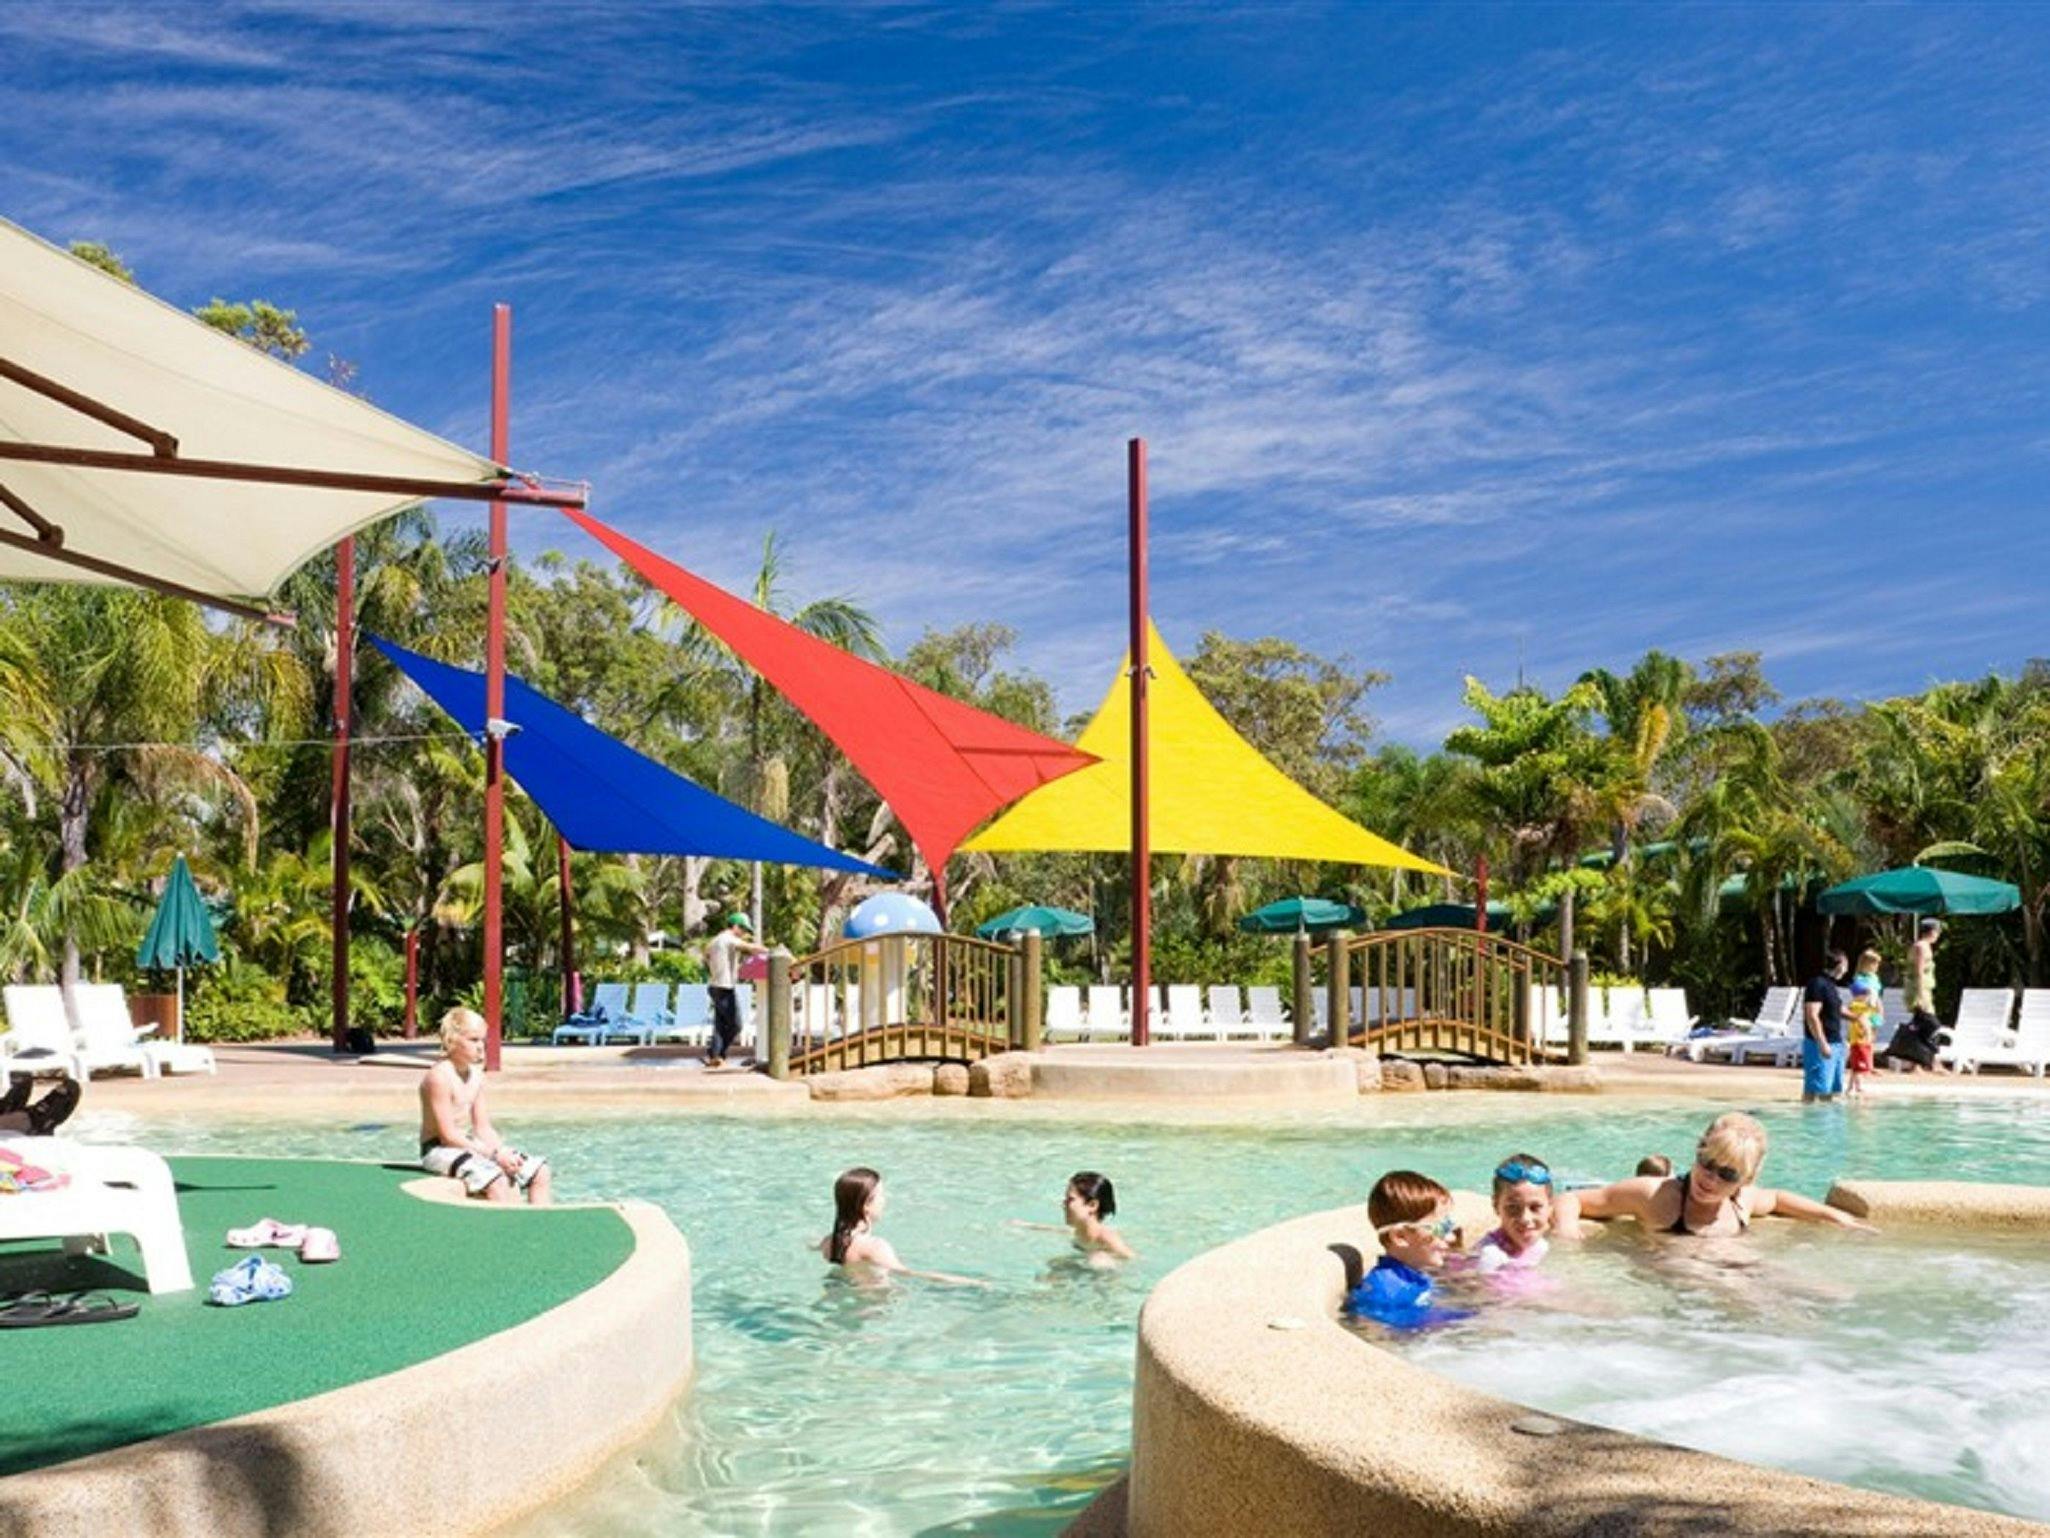 NRMA Ocean Beach Holiday Resort | NSW Holidays & Accommodation, Things